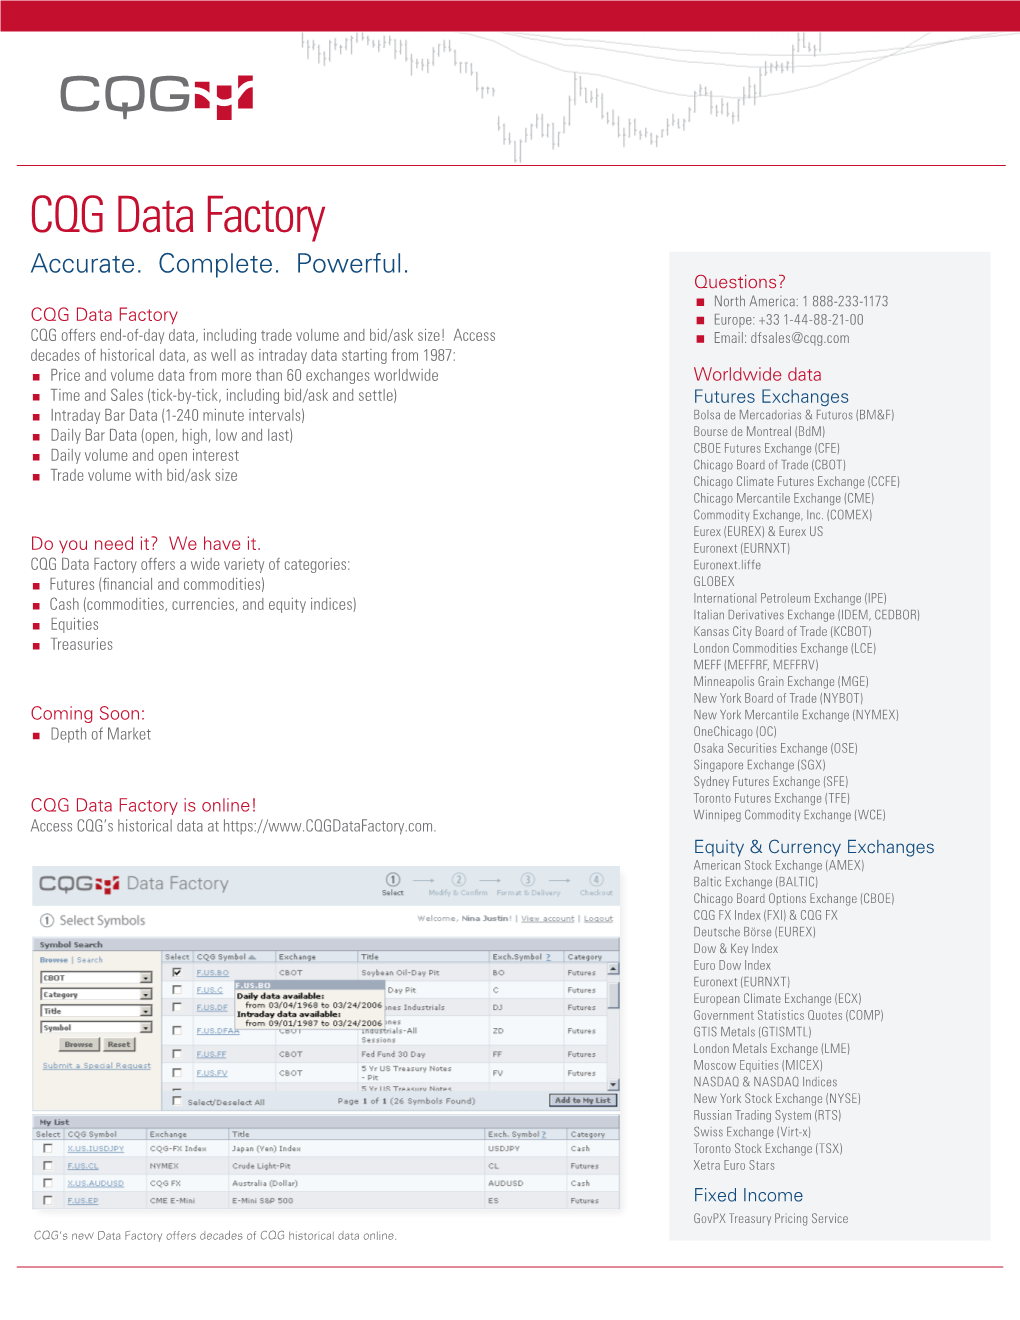 CQG Data Factory Accurate